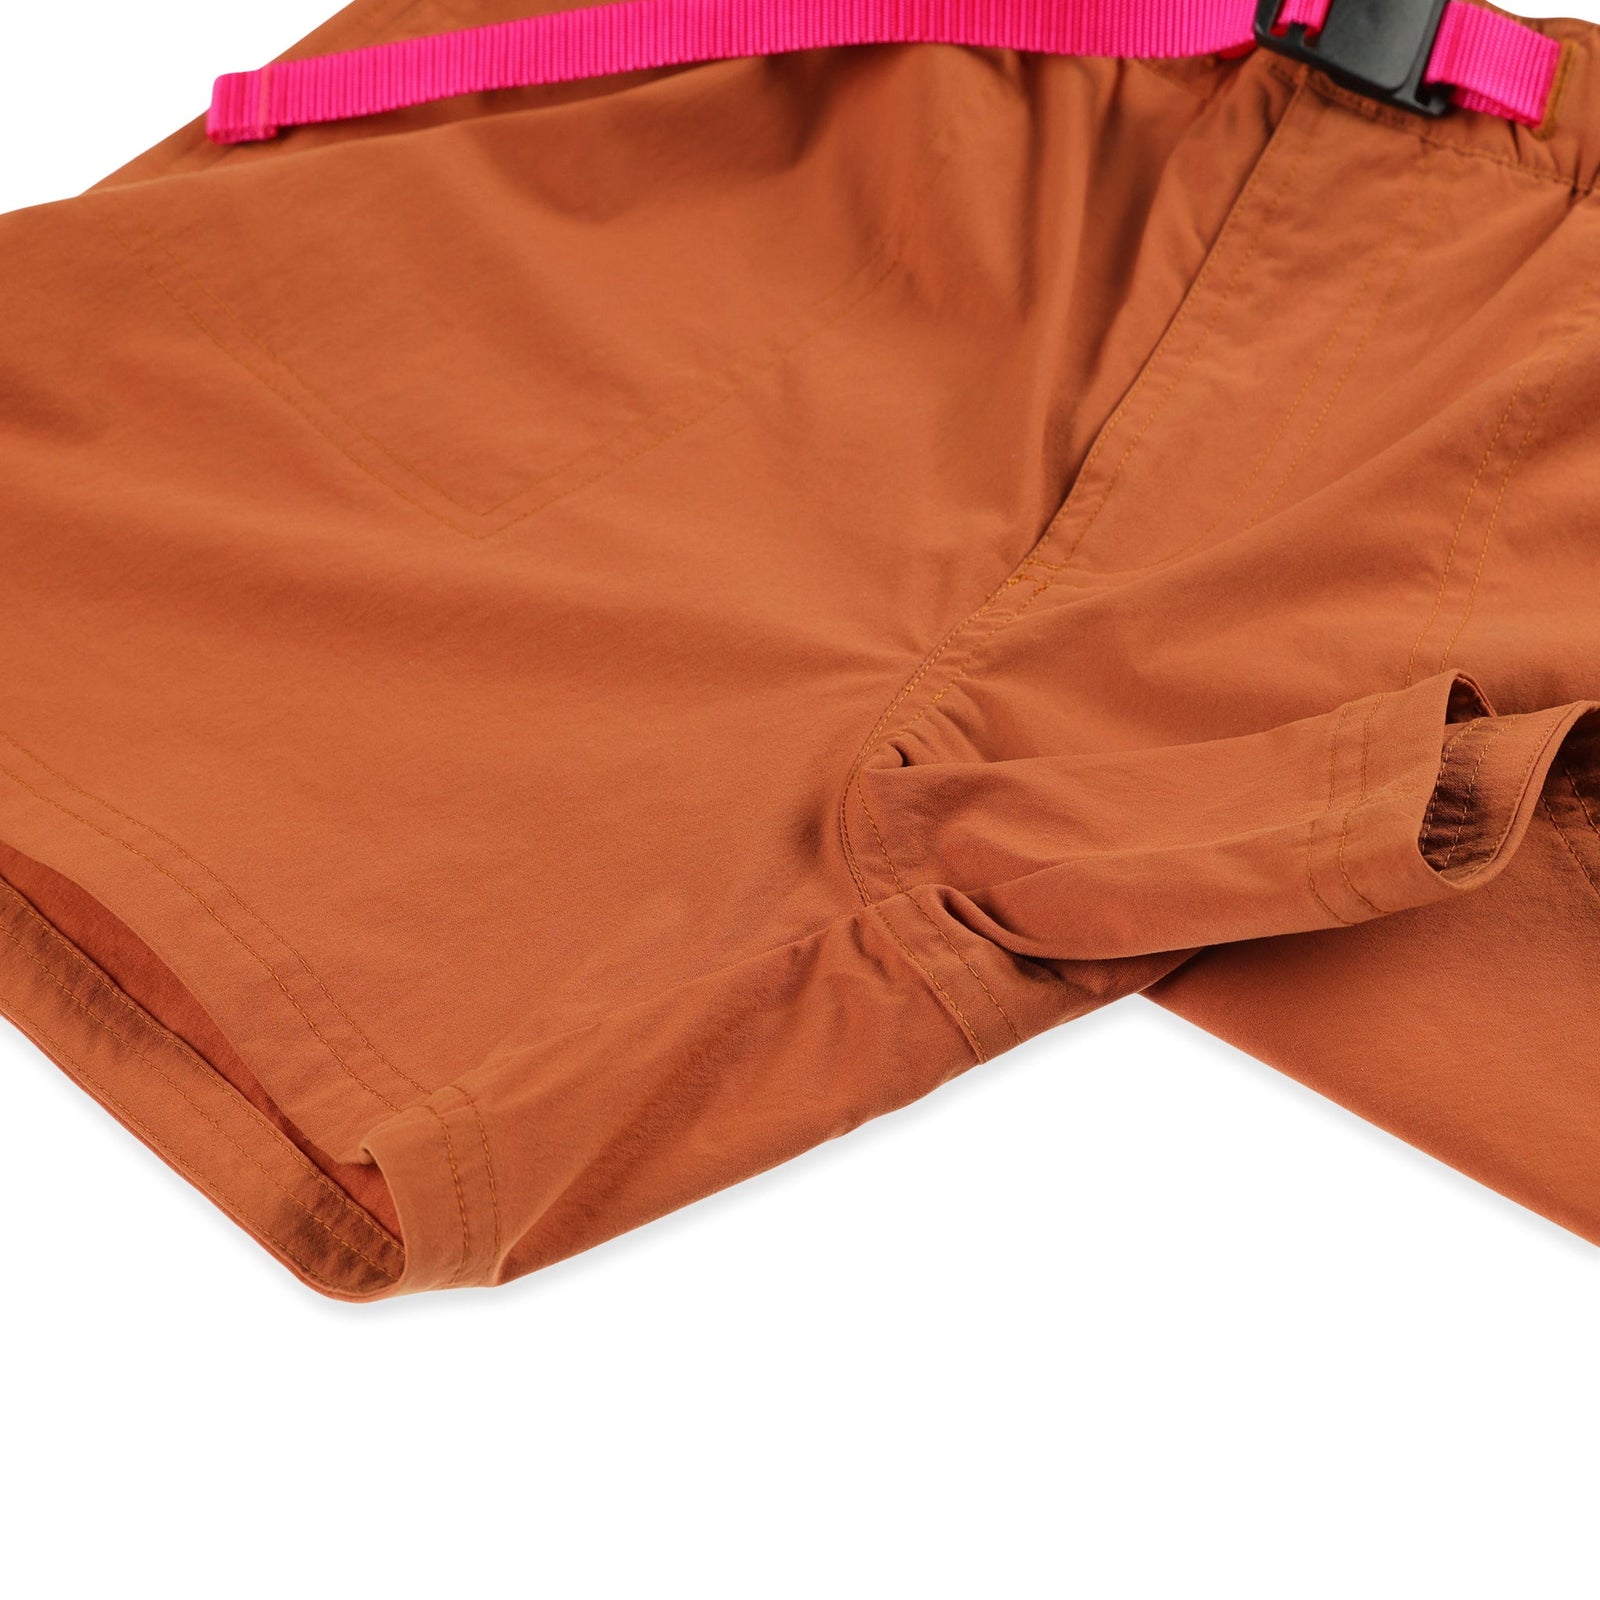 General 4" inseam on Topo Designs Women's River quick-dry swim Shorts in Brick orange.